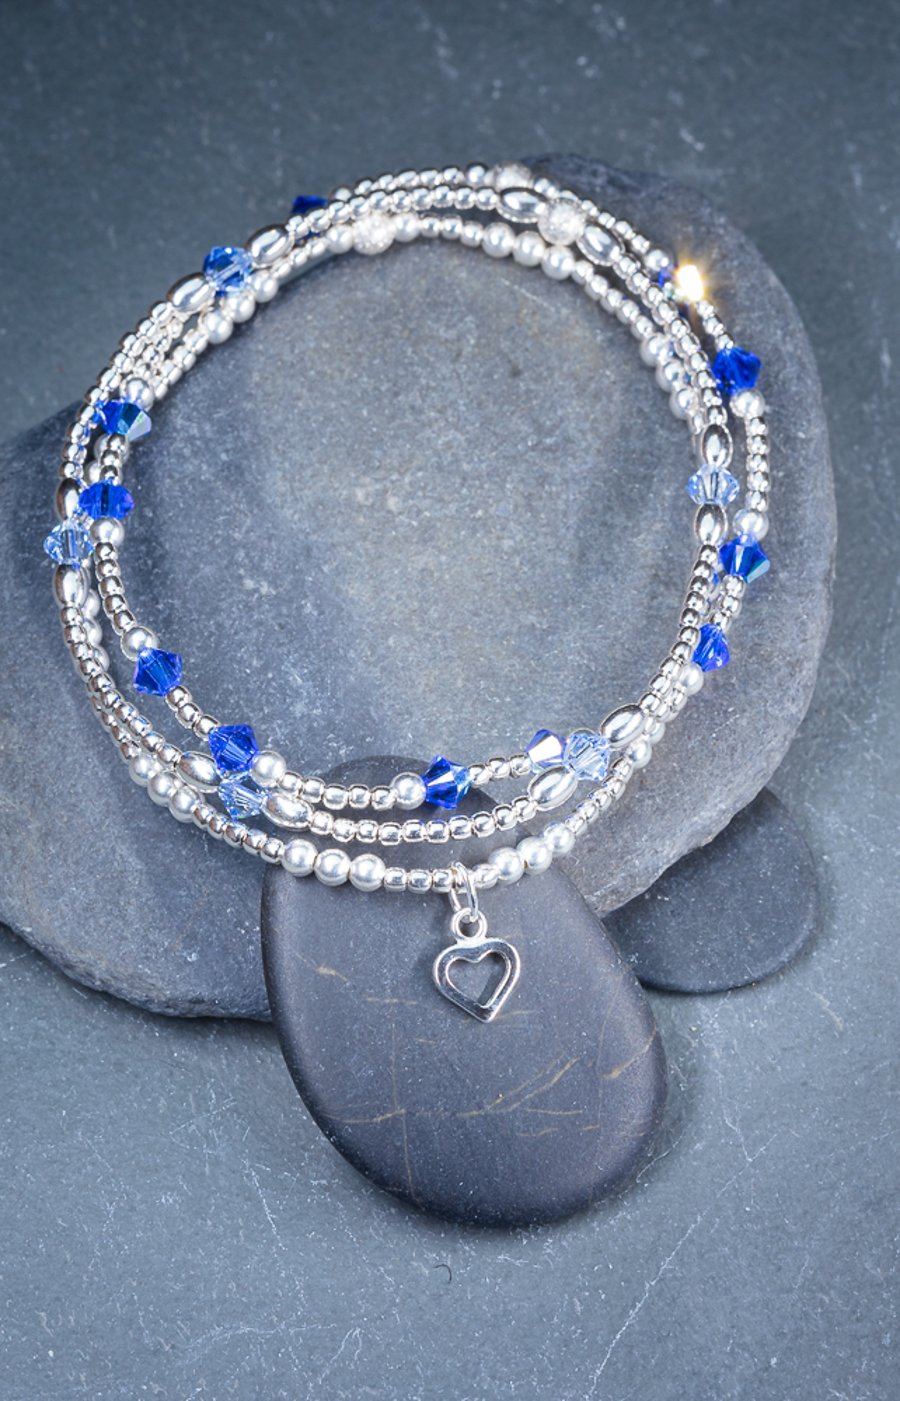 Sterling silver stacking bracelets with blue swarovski beads